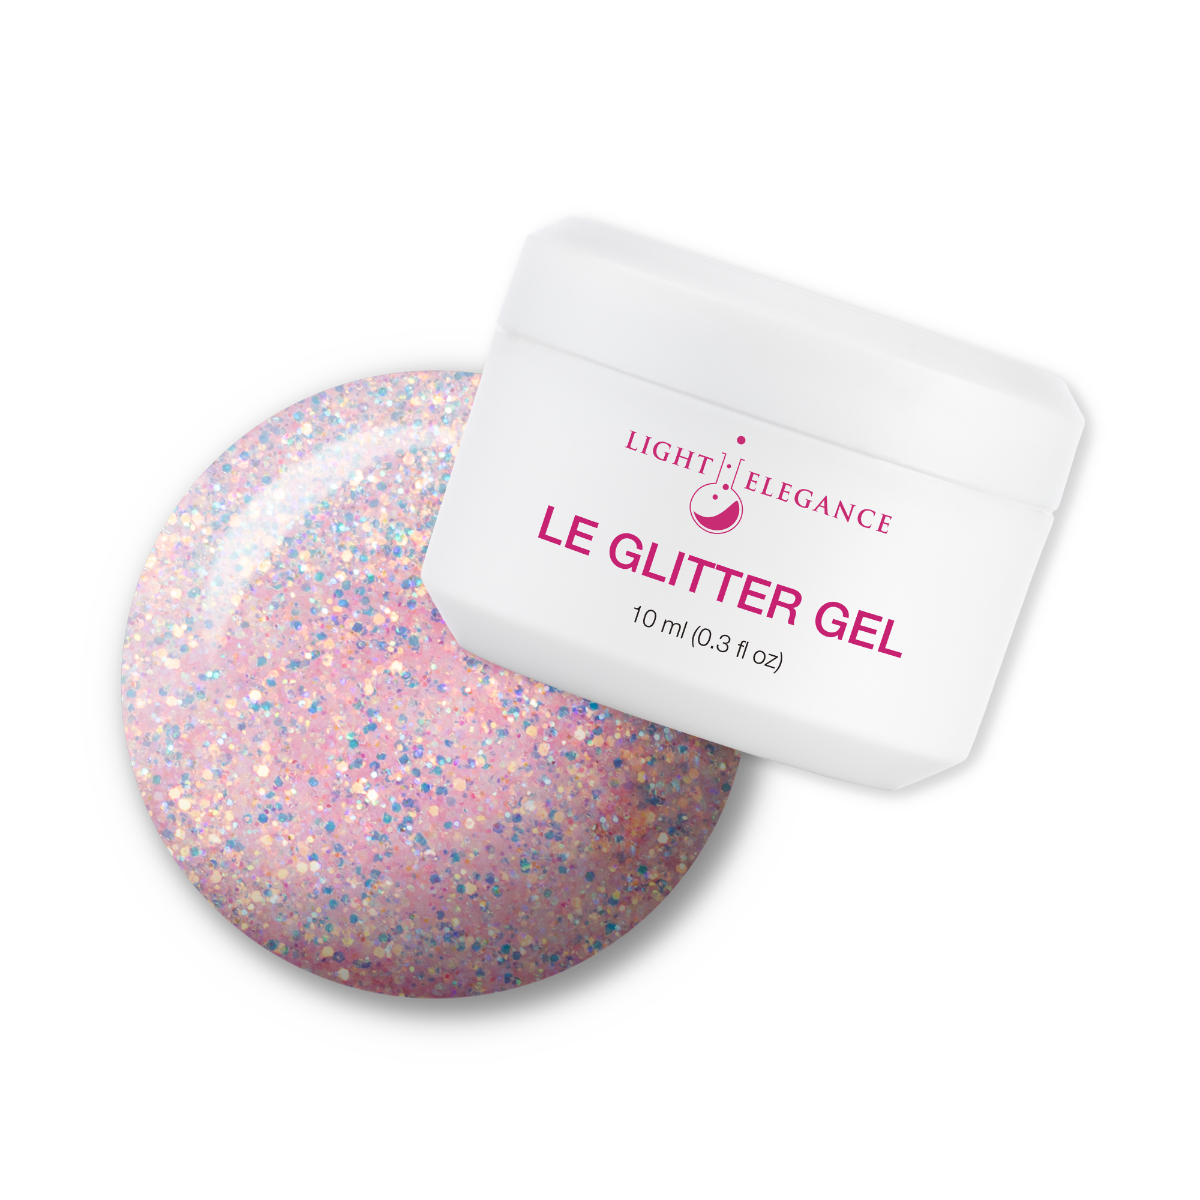 Light Elegance Glitter Gel - Bee in Your Bonnet :: New Packaging - Creata Beauty - Professional Beauty Products